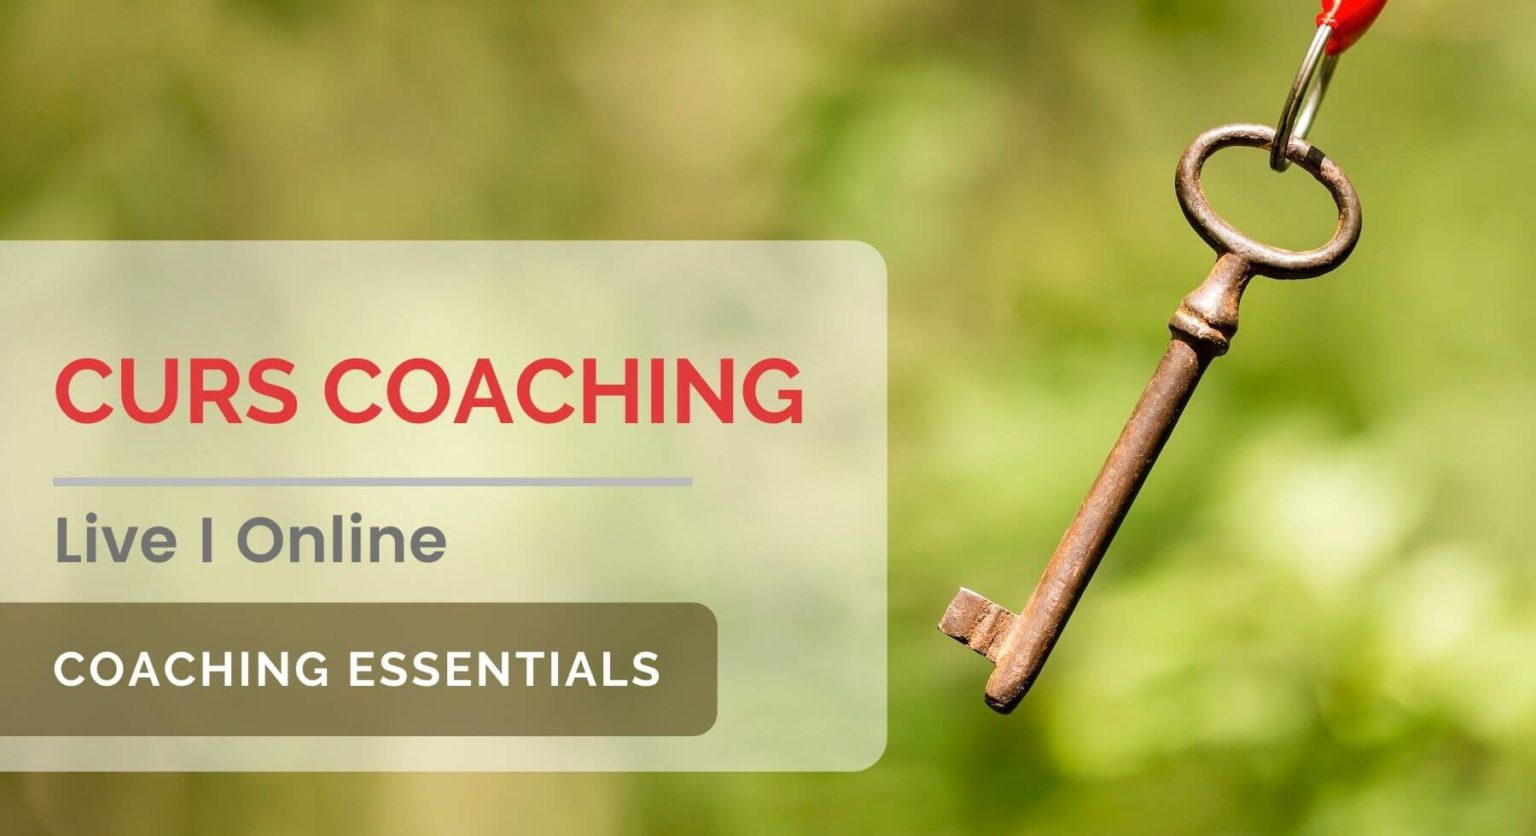 curs coaching online